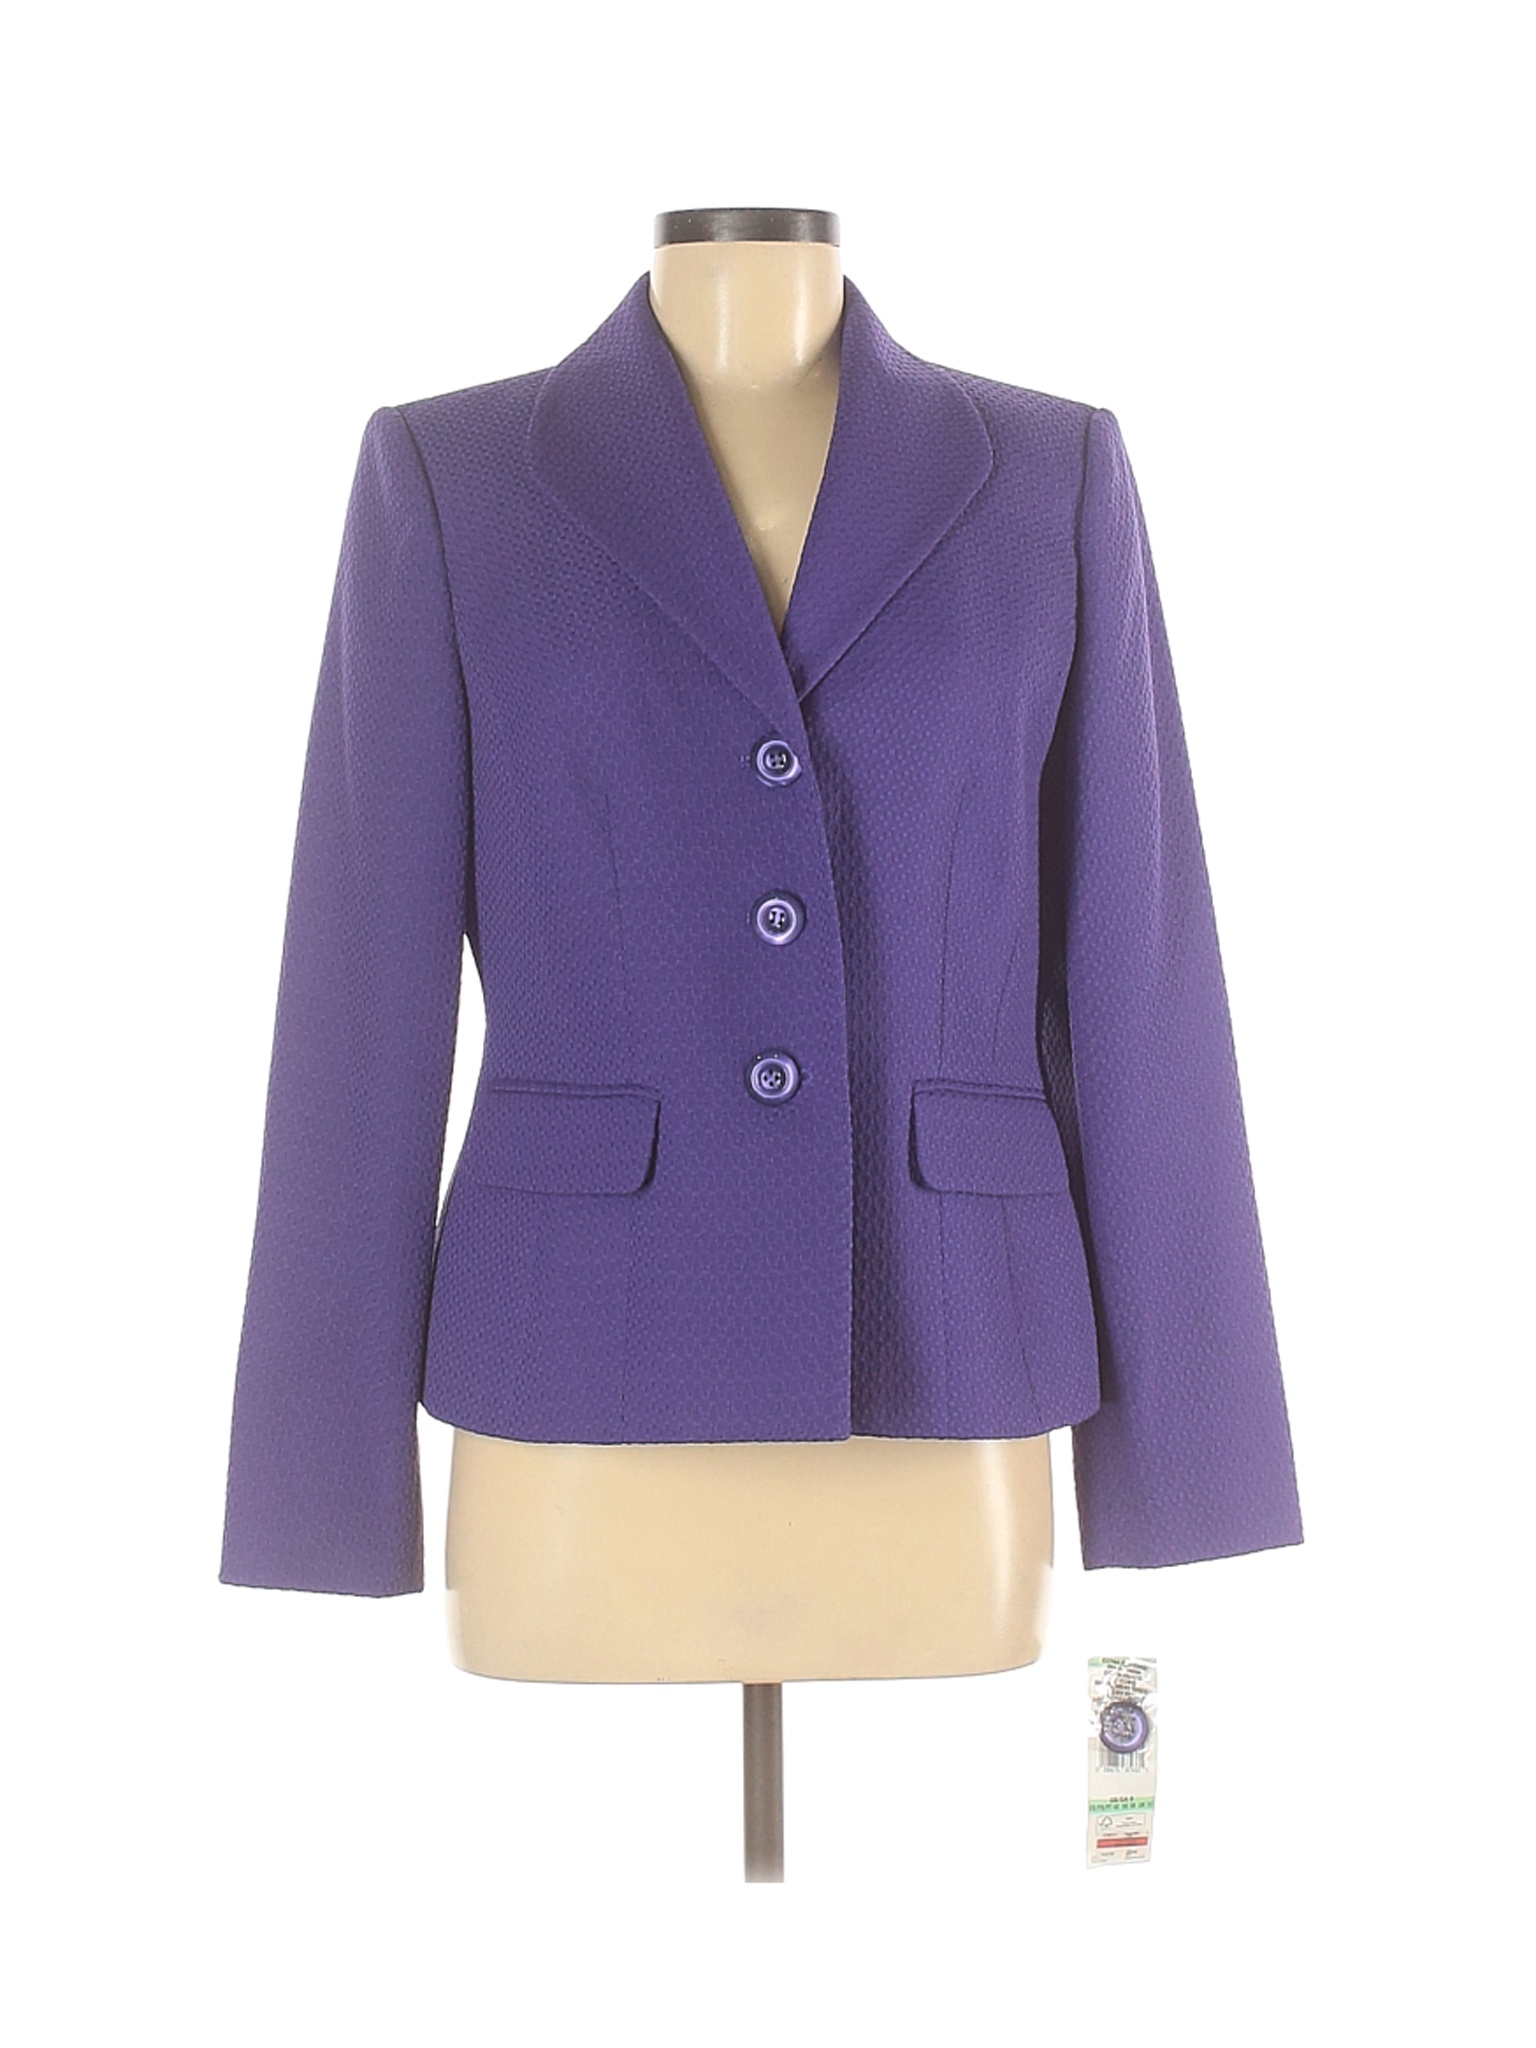 NWT Evan Picone Women Purple Blazer 8 | eBay